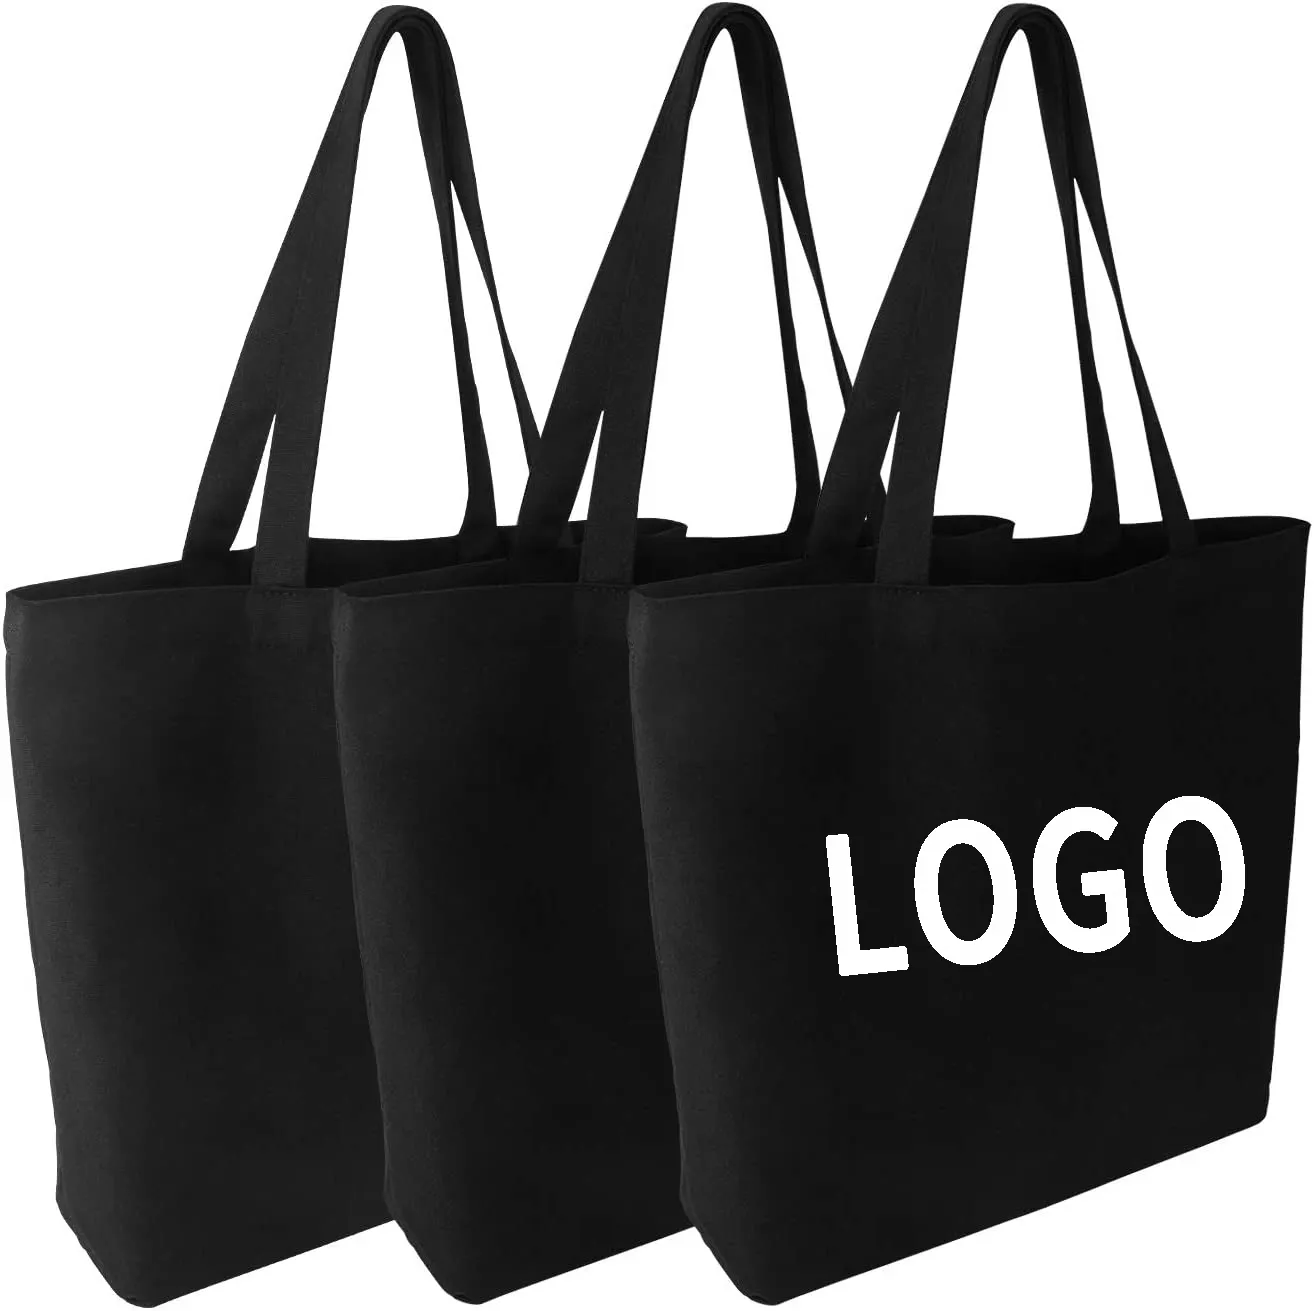 Bolsa de algodón reutilizable para compras, bolsa de mano ecológica de 12oz, de lona, de algodón reciclada con logotipo